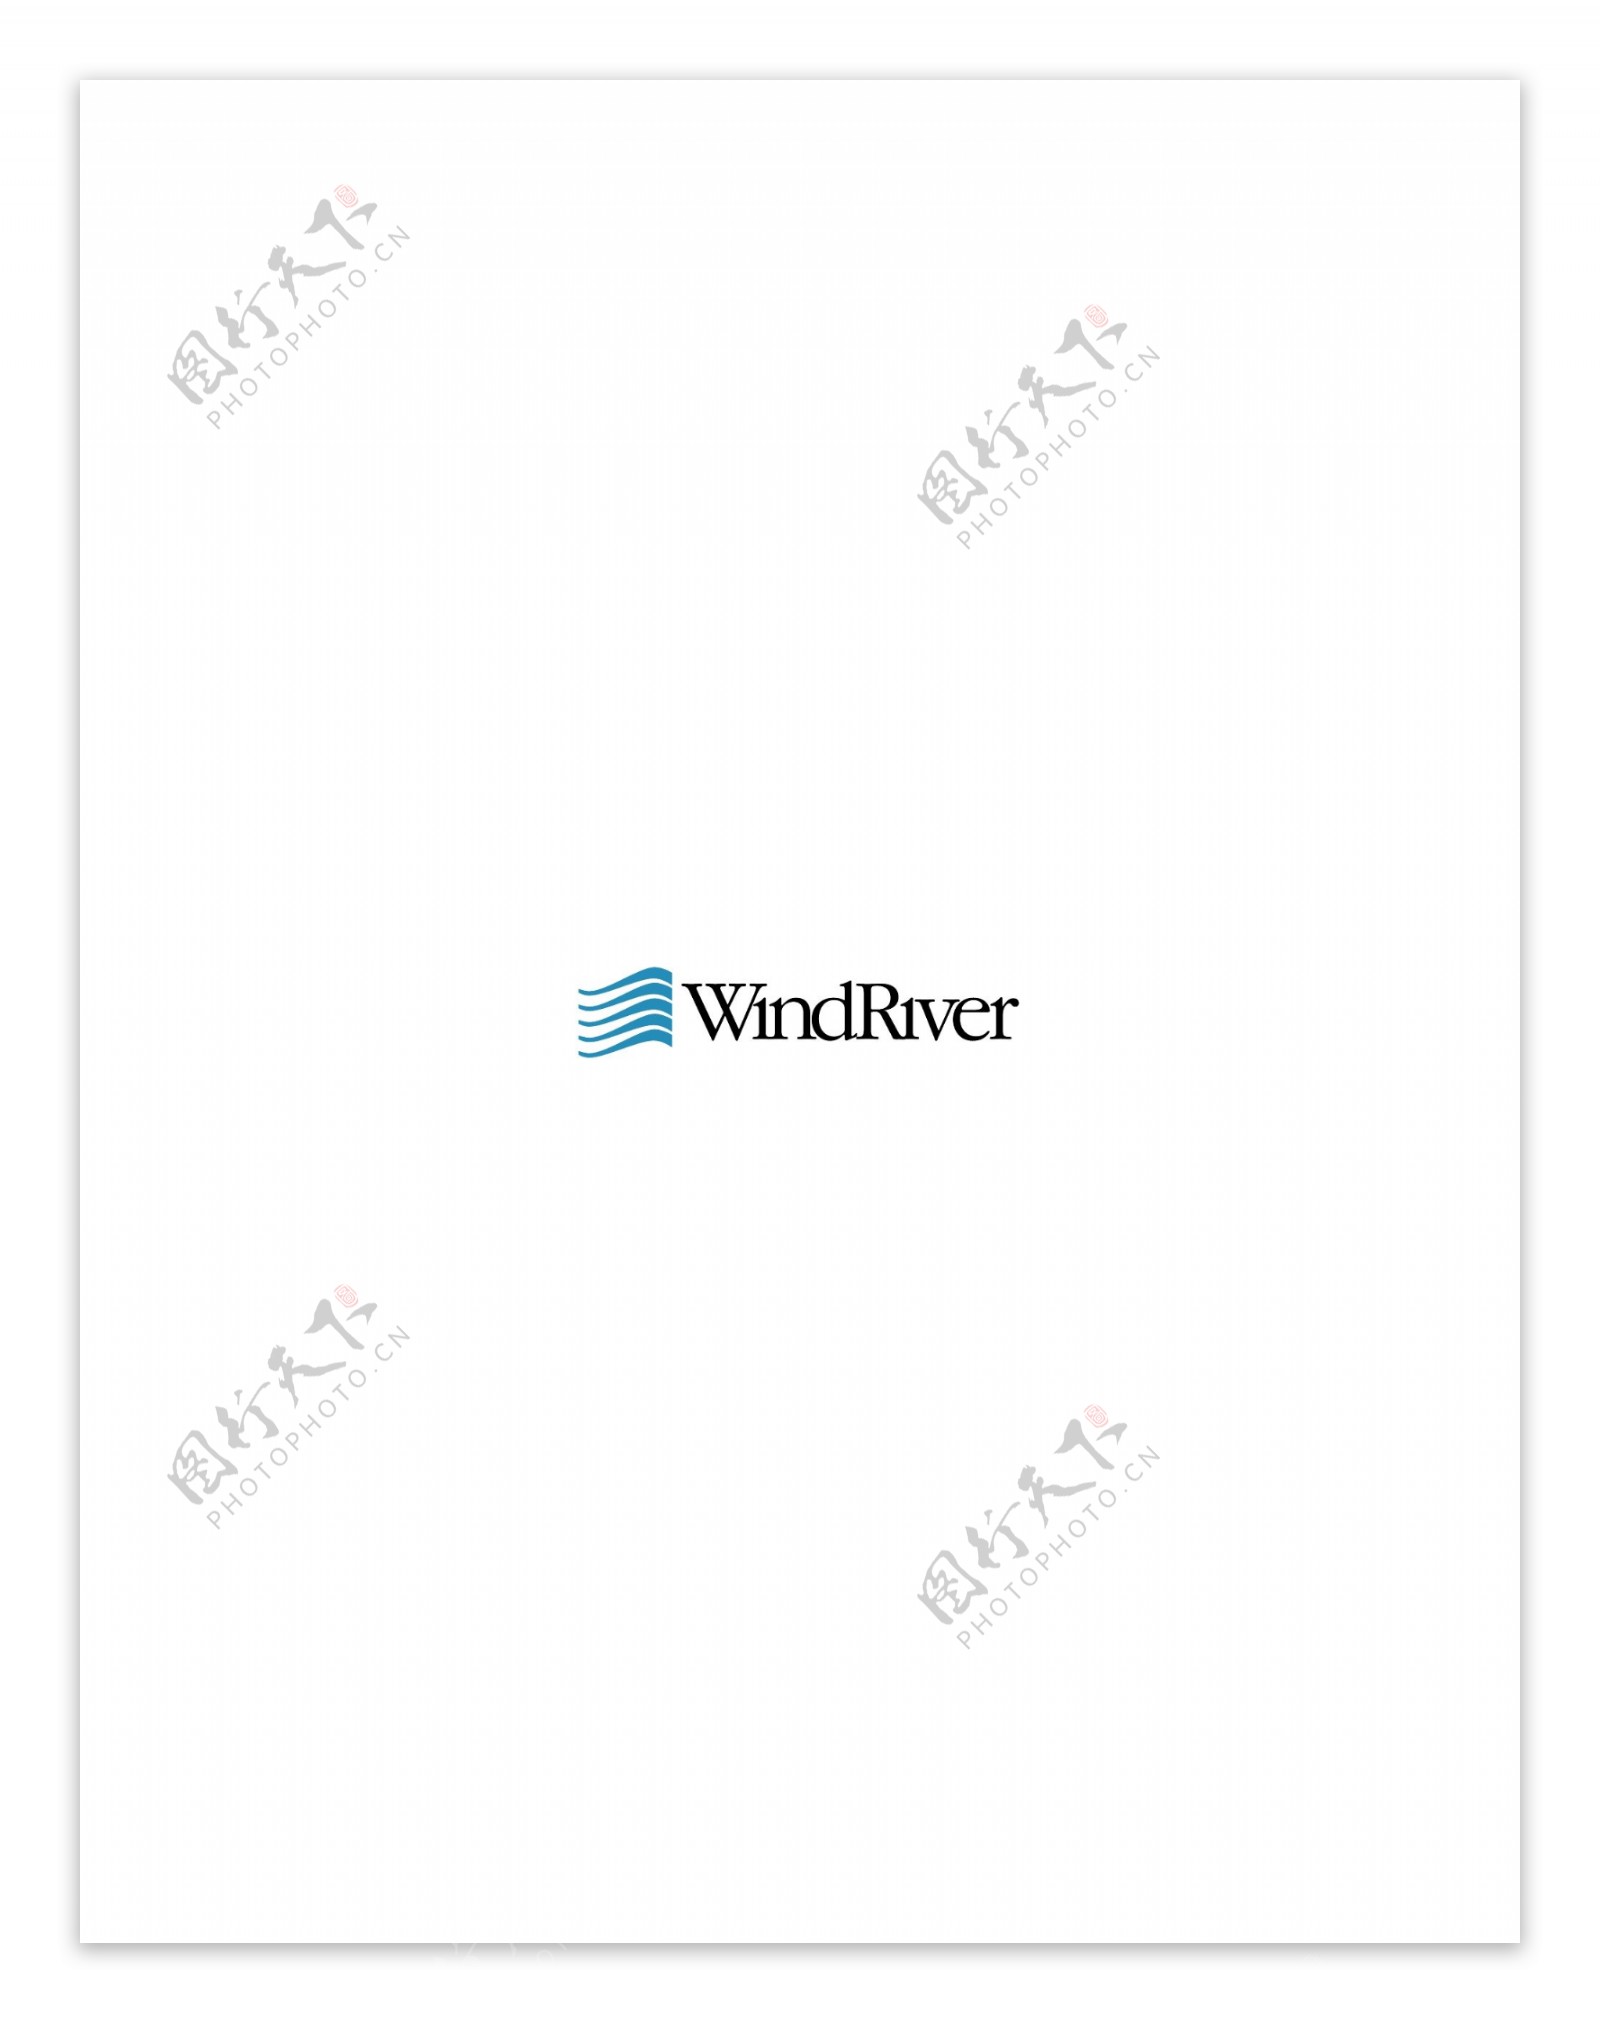 WindRiverlogo设计欣赏国外知名公司标志范例WindRiver下载标志设计欣赏